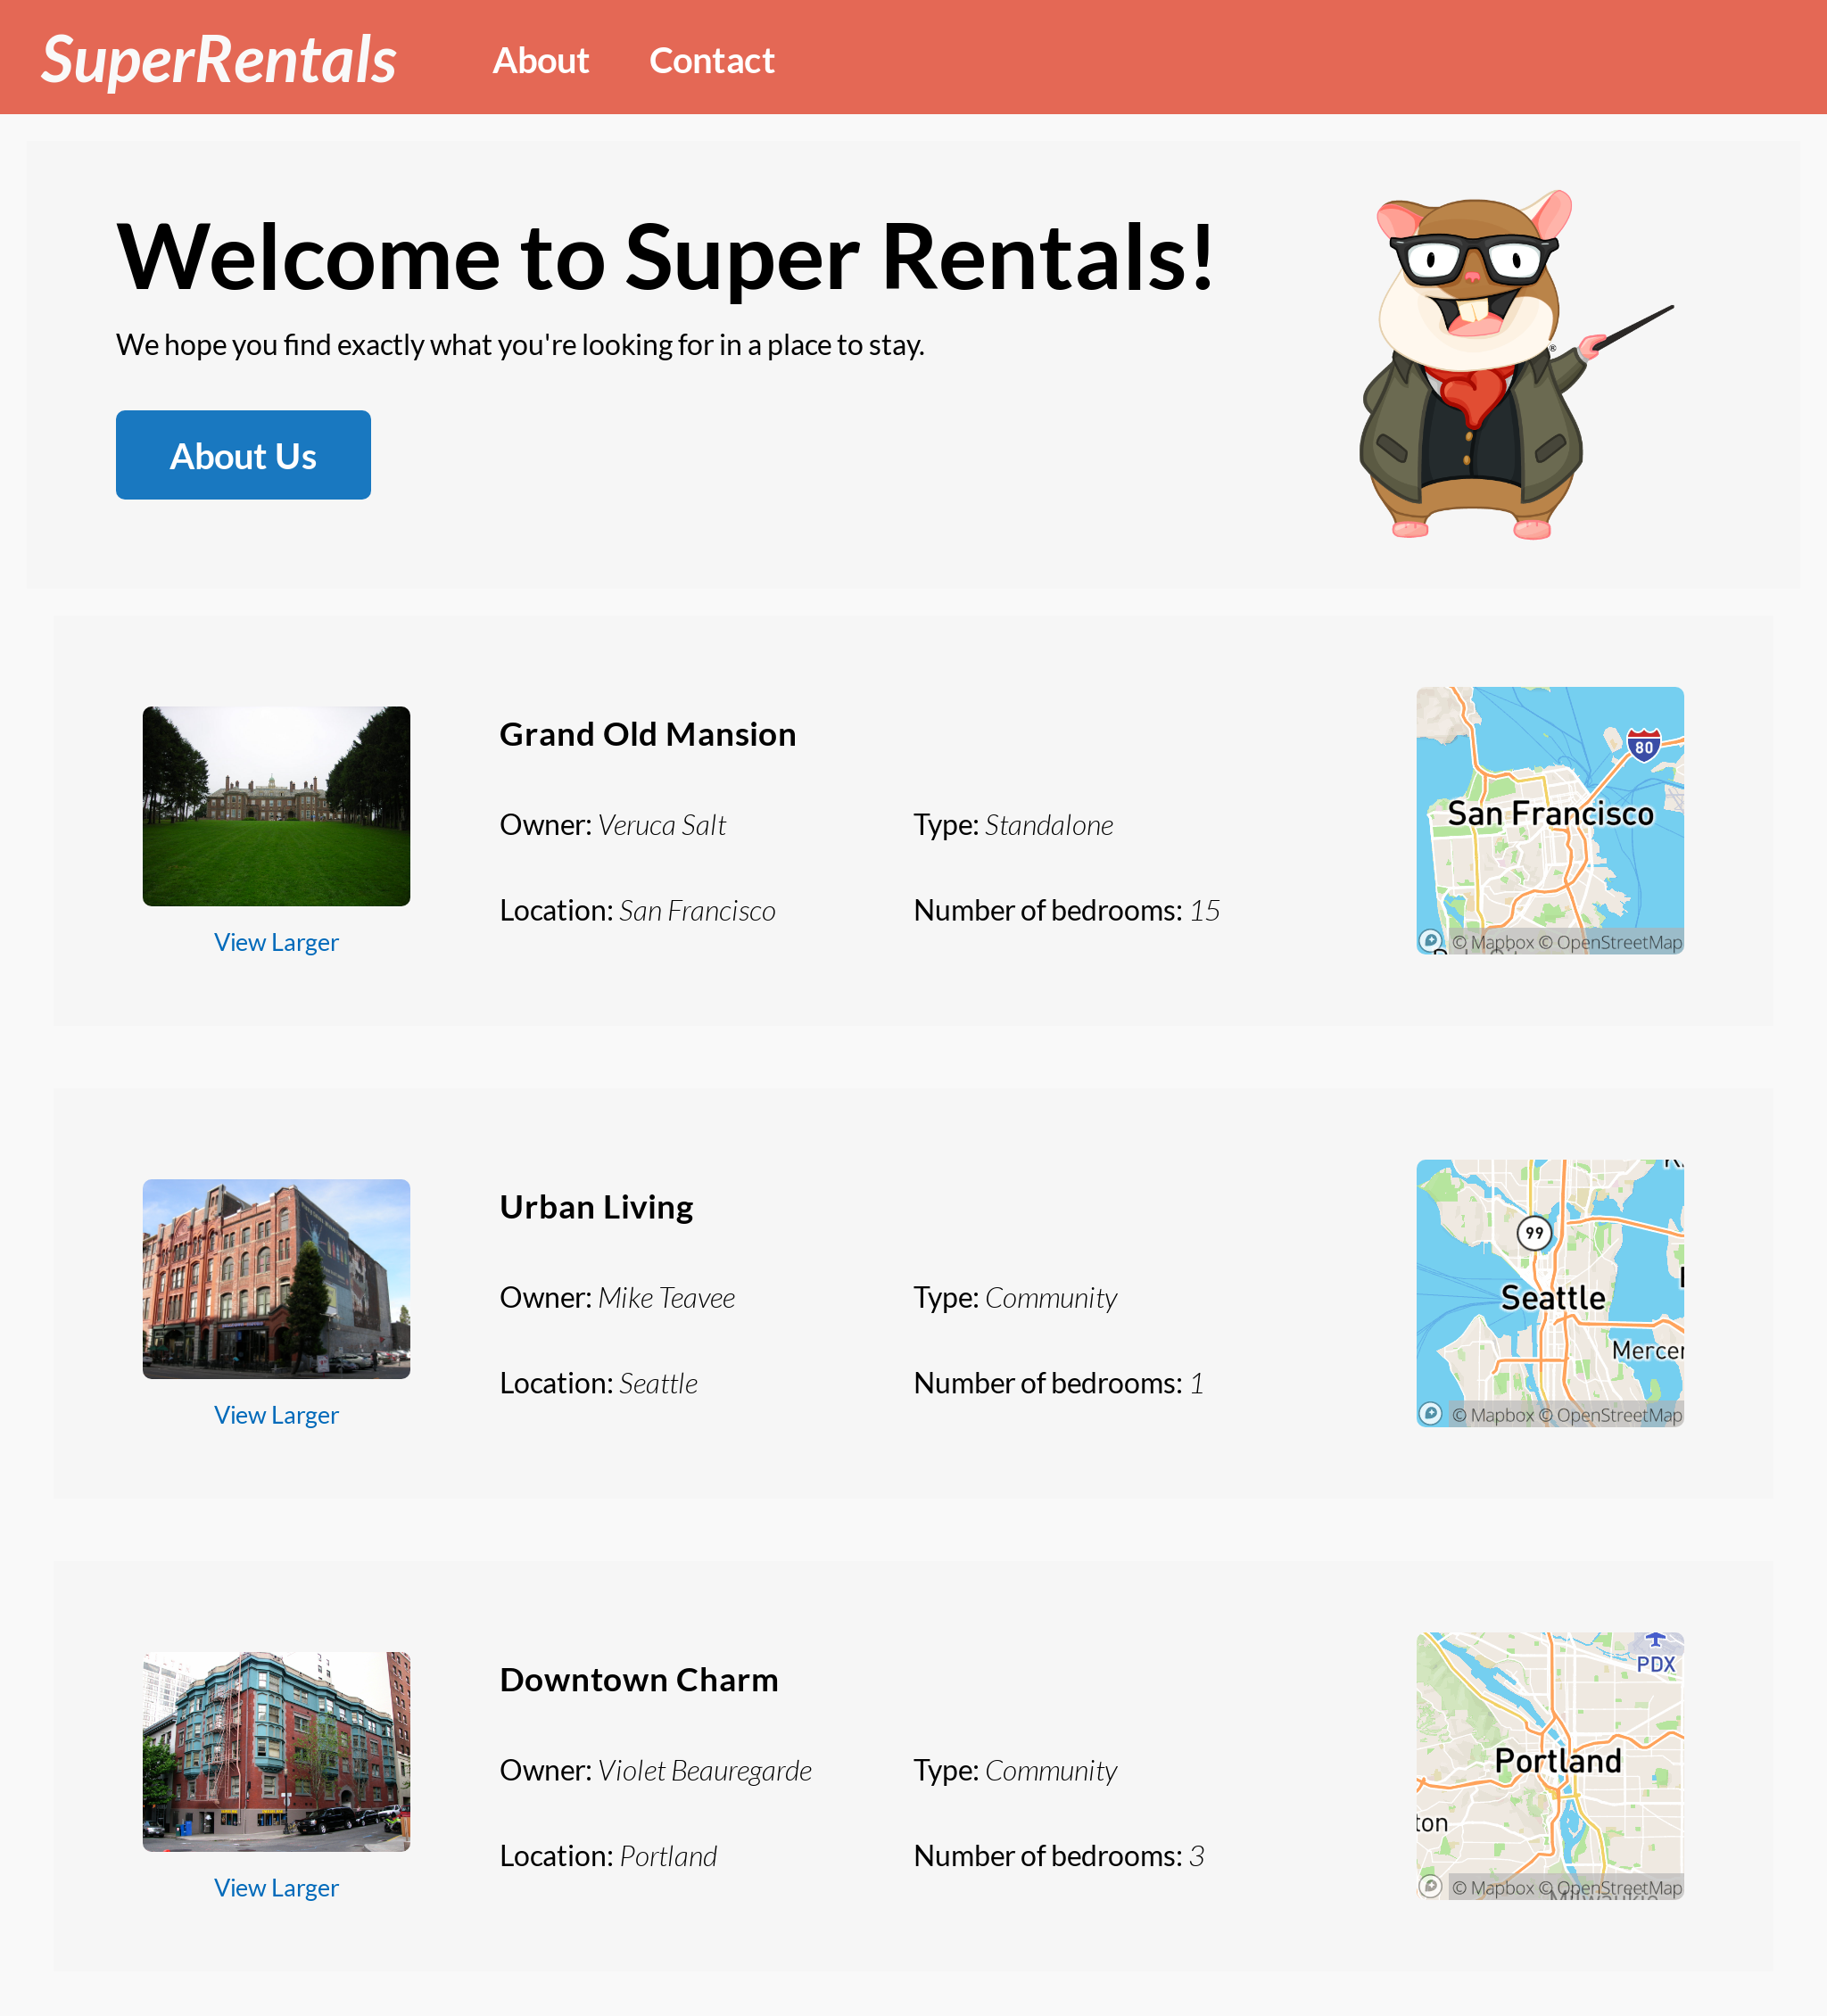 The finished Super Rentals app